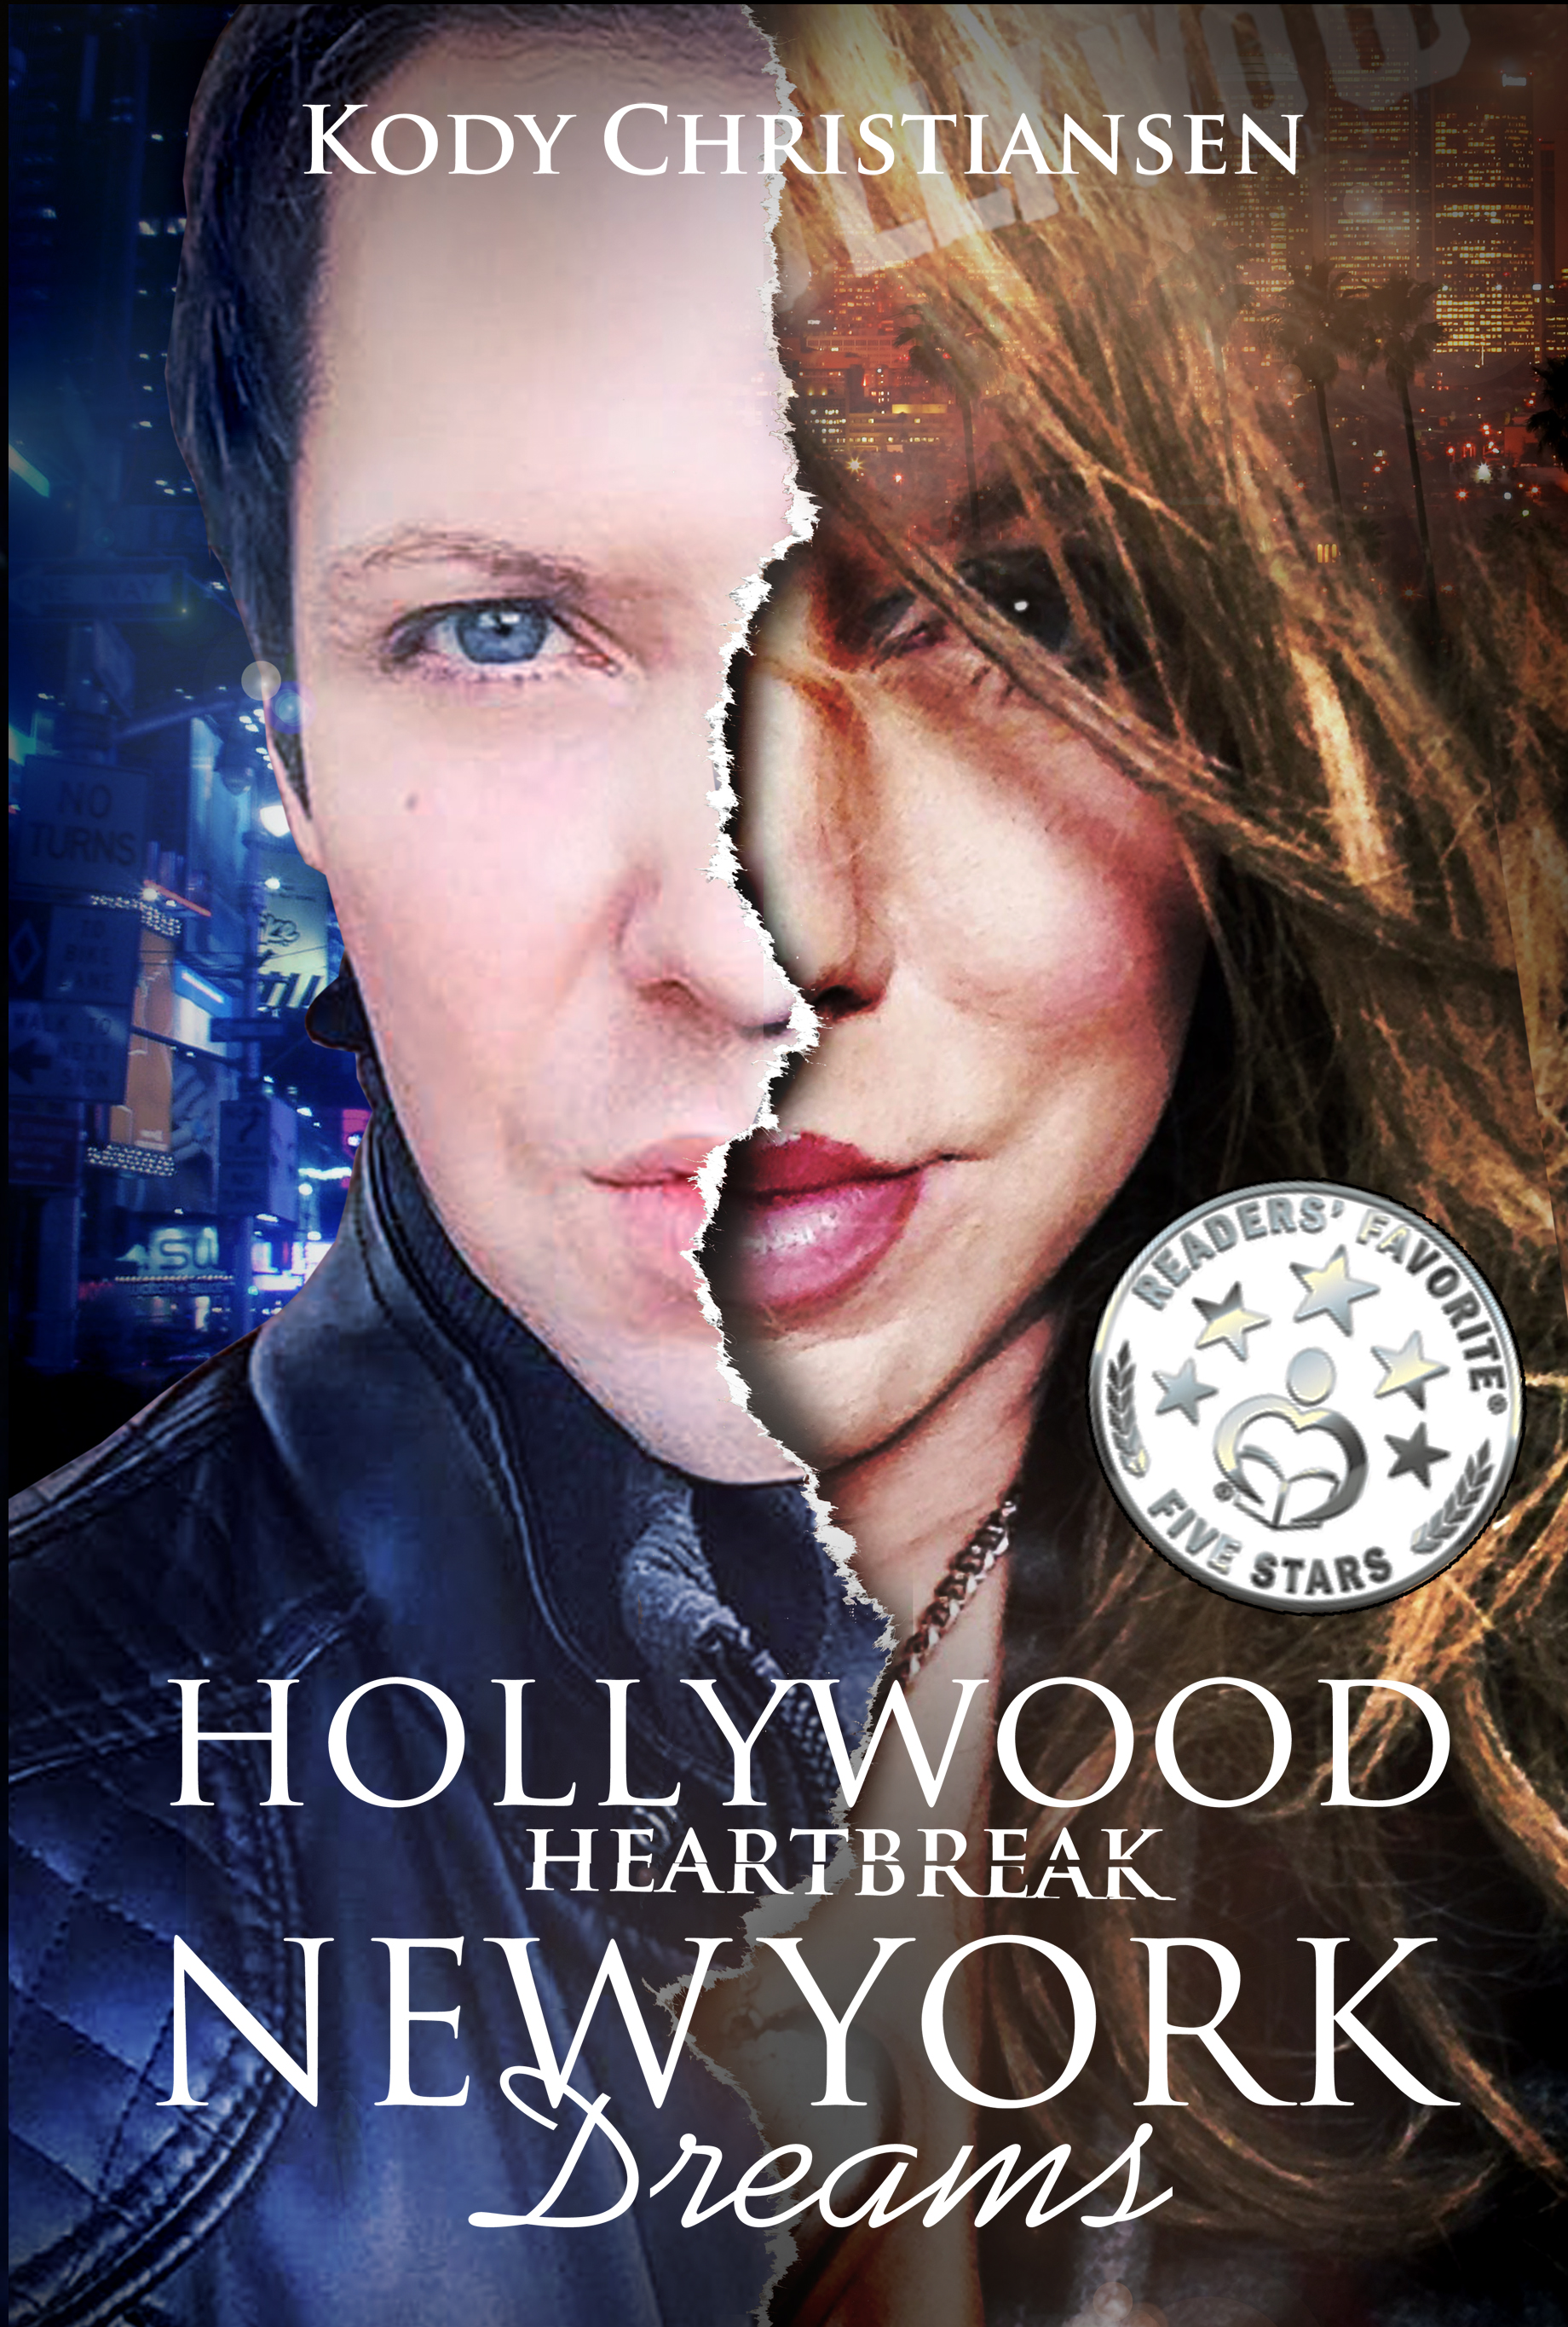 "Hollywood Heartbreak | New York Dreams"